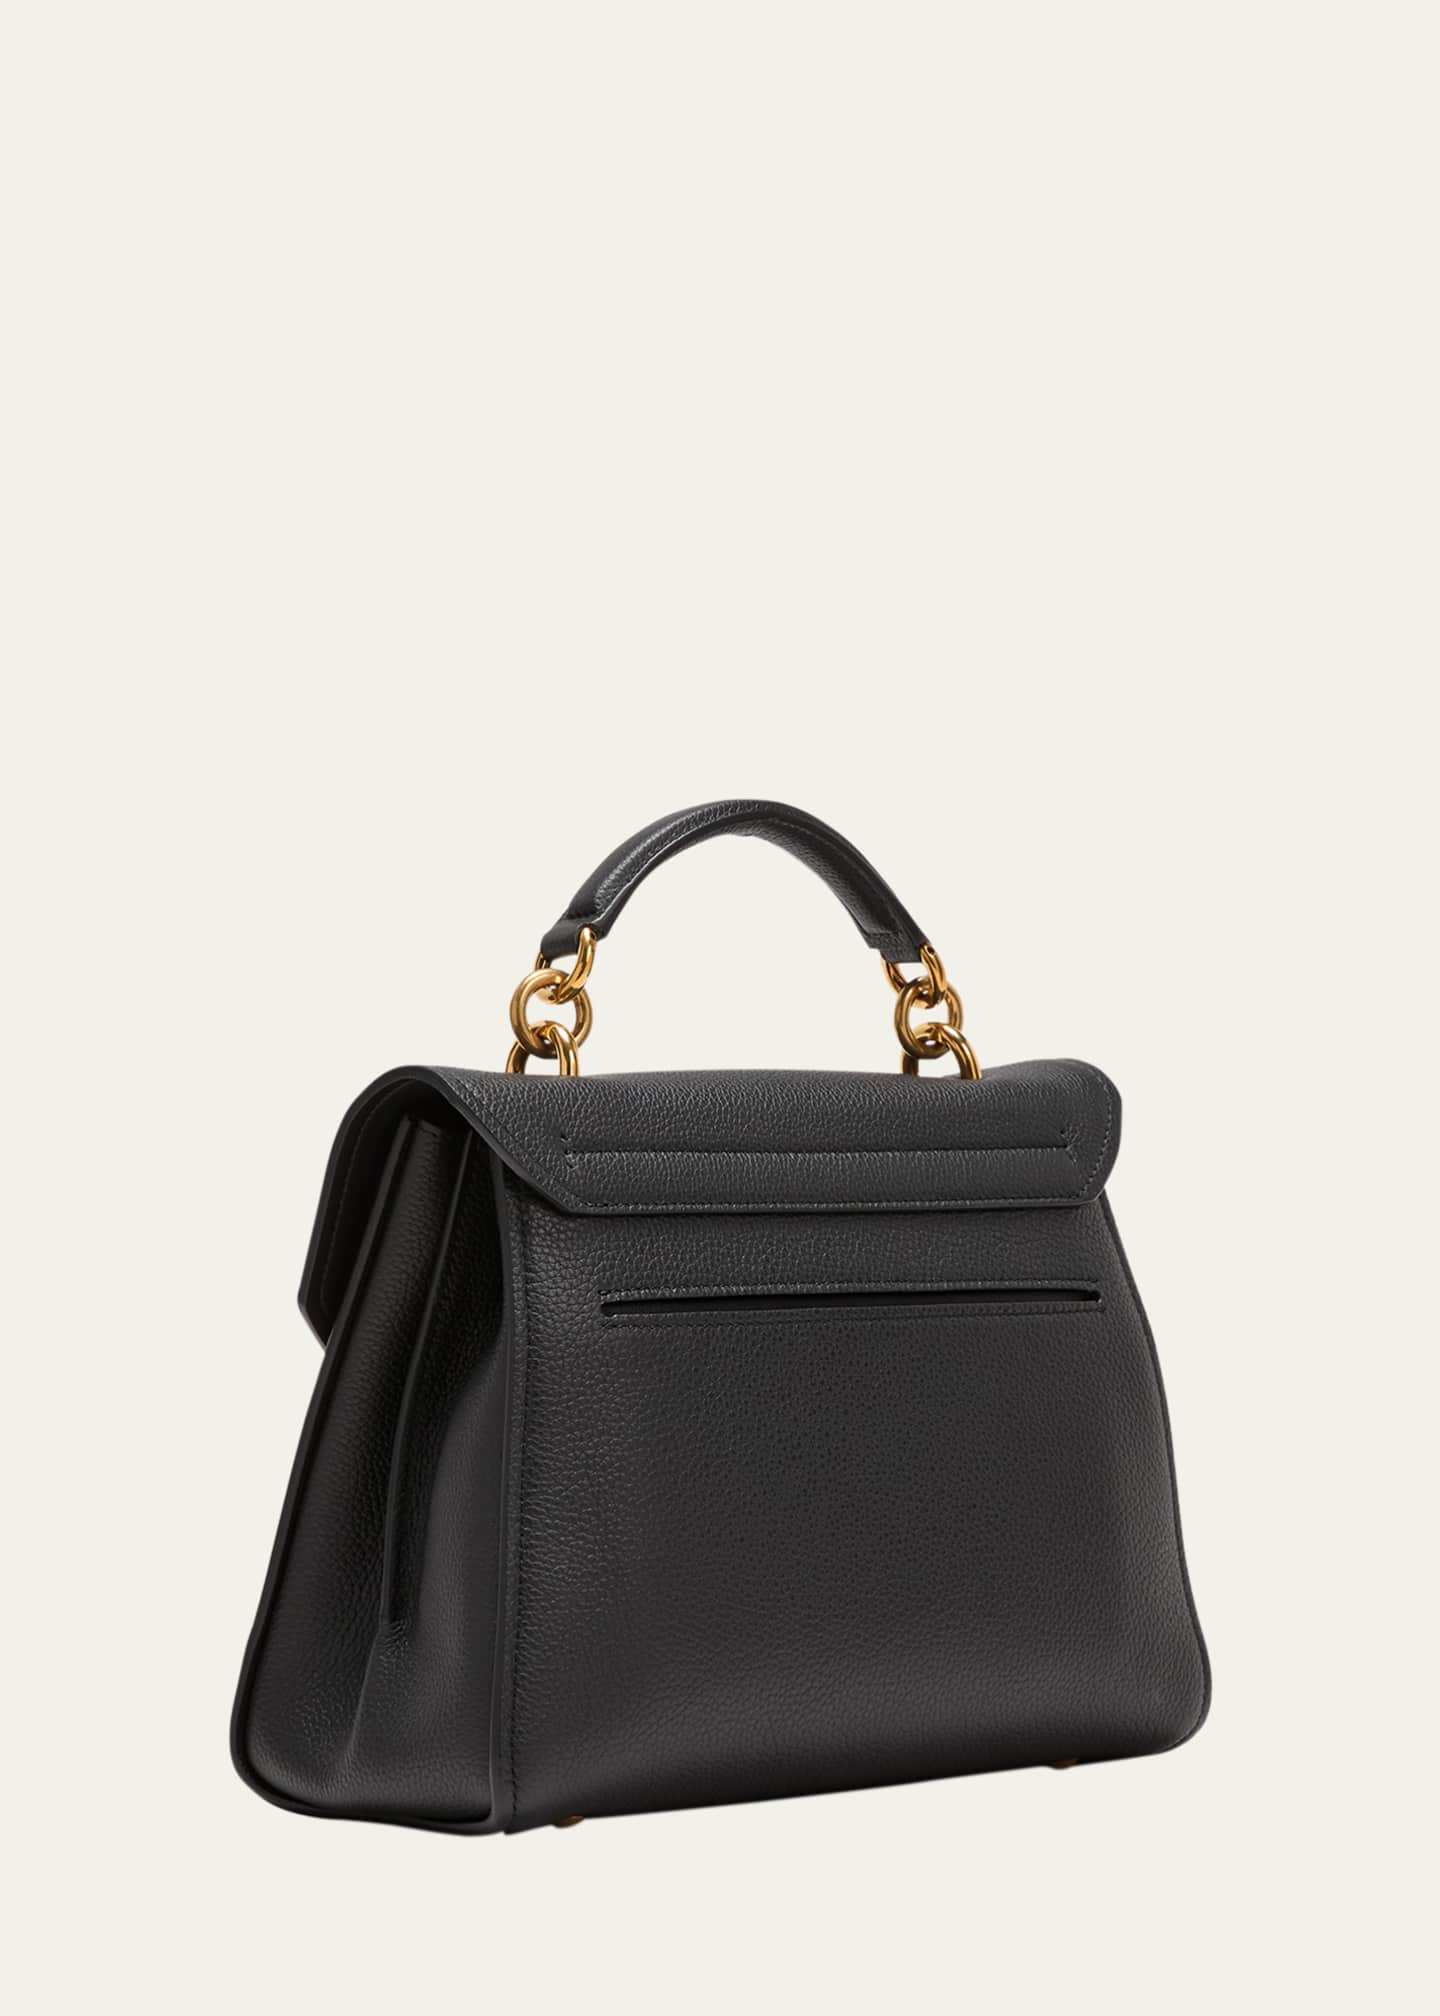 Ferragamo Margot Gancini Leather Hobo Bag in Black